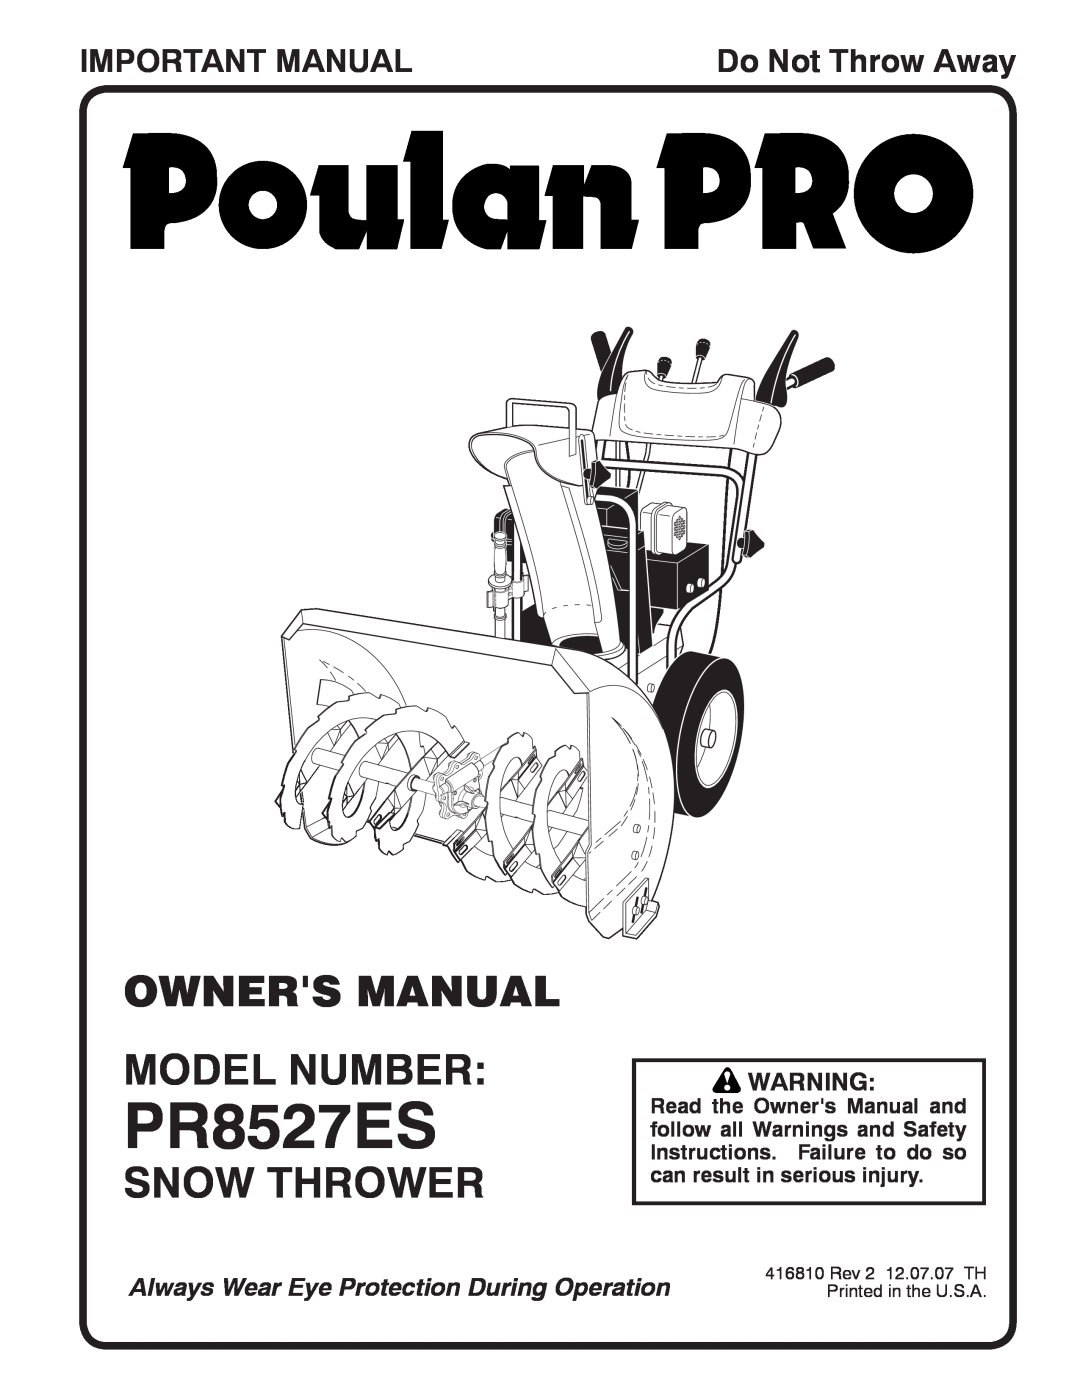 Poulan 416810 owner manual Snow Thrower, Important Manual, PR8527ES, Do Not Throw Away 